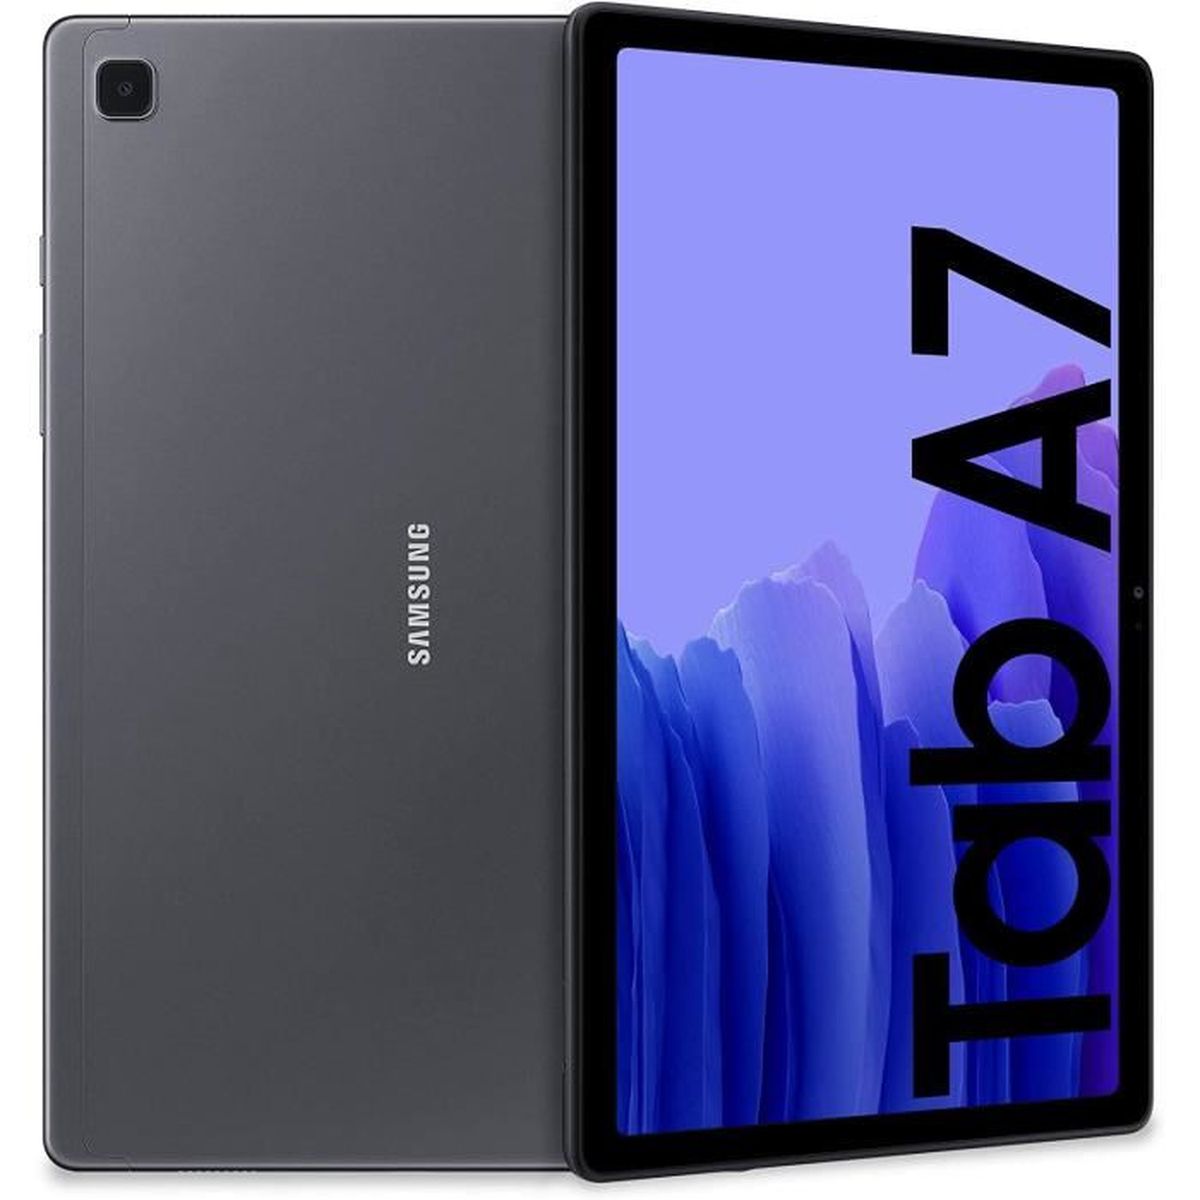 Sony Xperia Z4 Tablet WLAN + LTE (SGP771) 32Go noir pas cher